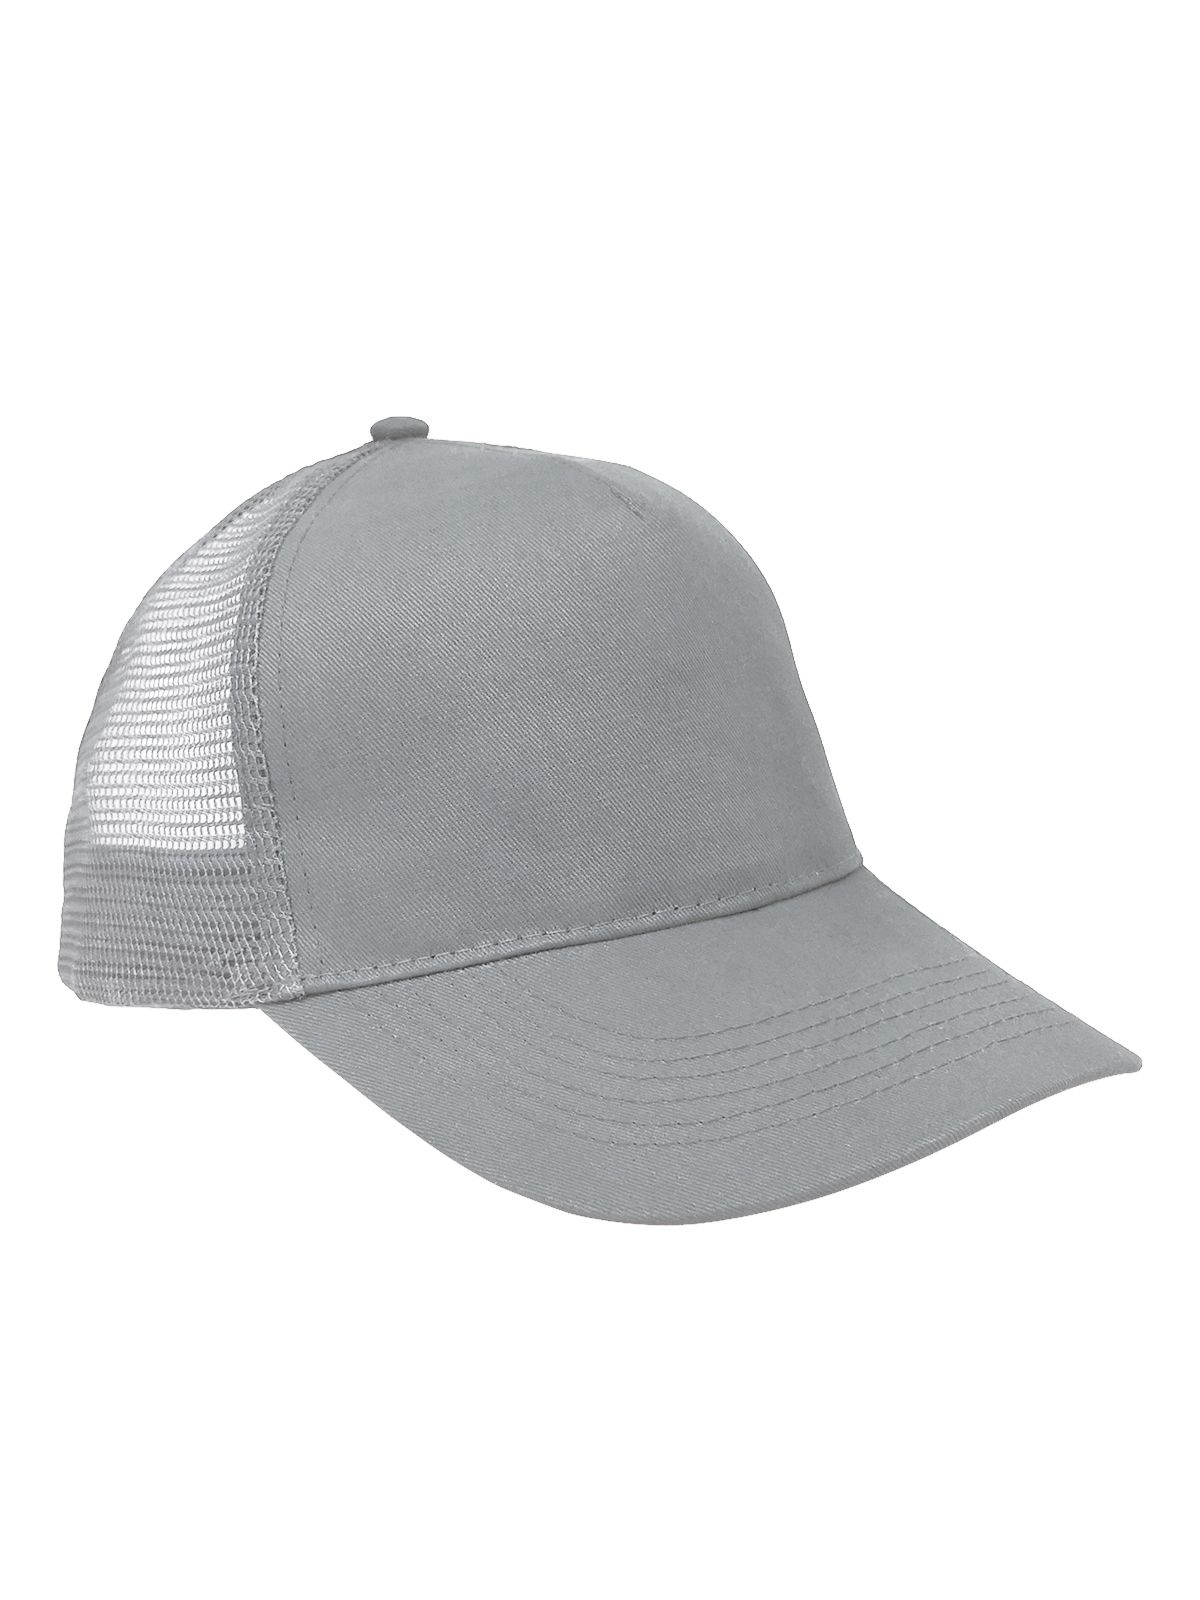 mesh-cotton-cap-light-grey.webp